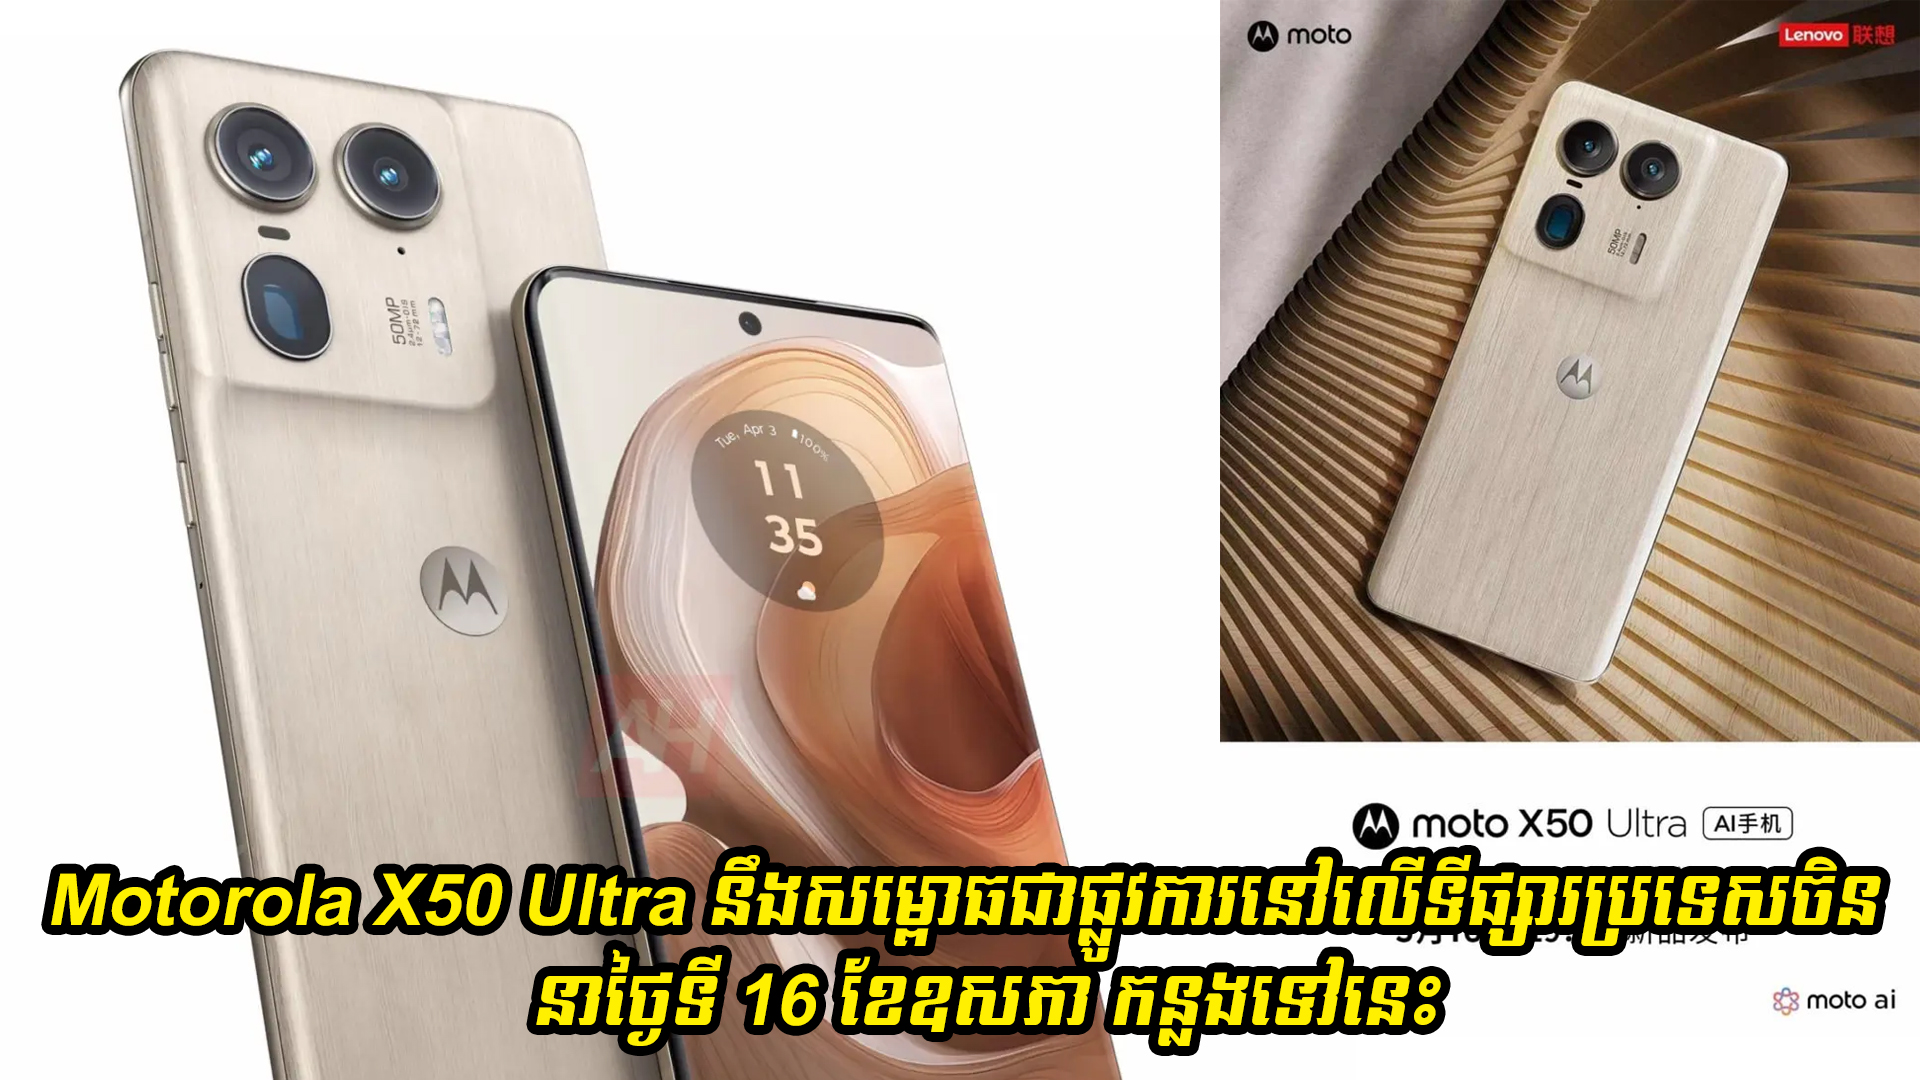 Motorola X50 Ultra នឹងសម្ពោធជាផ្លូវការនៅលើទីផ្សារប្រទេសចិននាថ្ងៃទី 16 ខែឧសភាខាងមុខនេះហើយ!